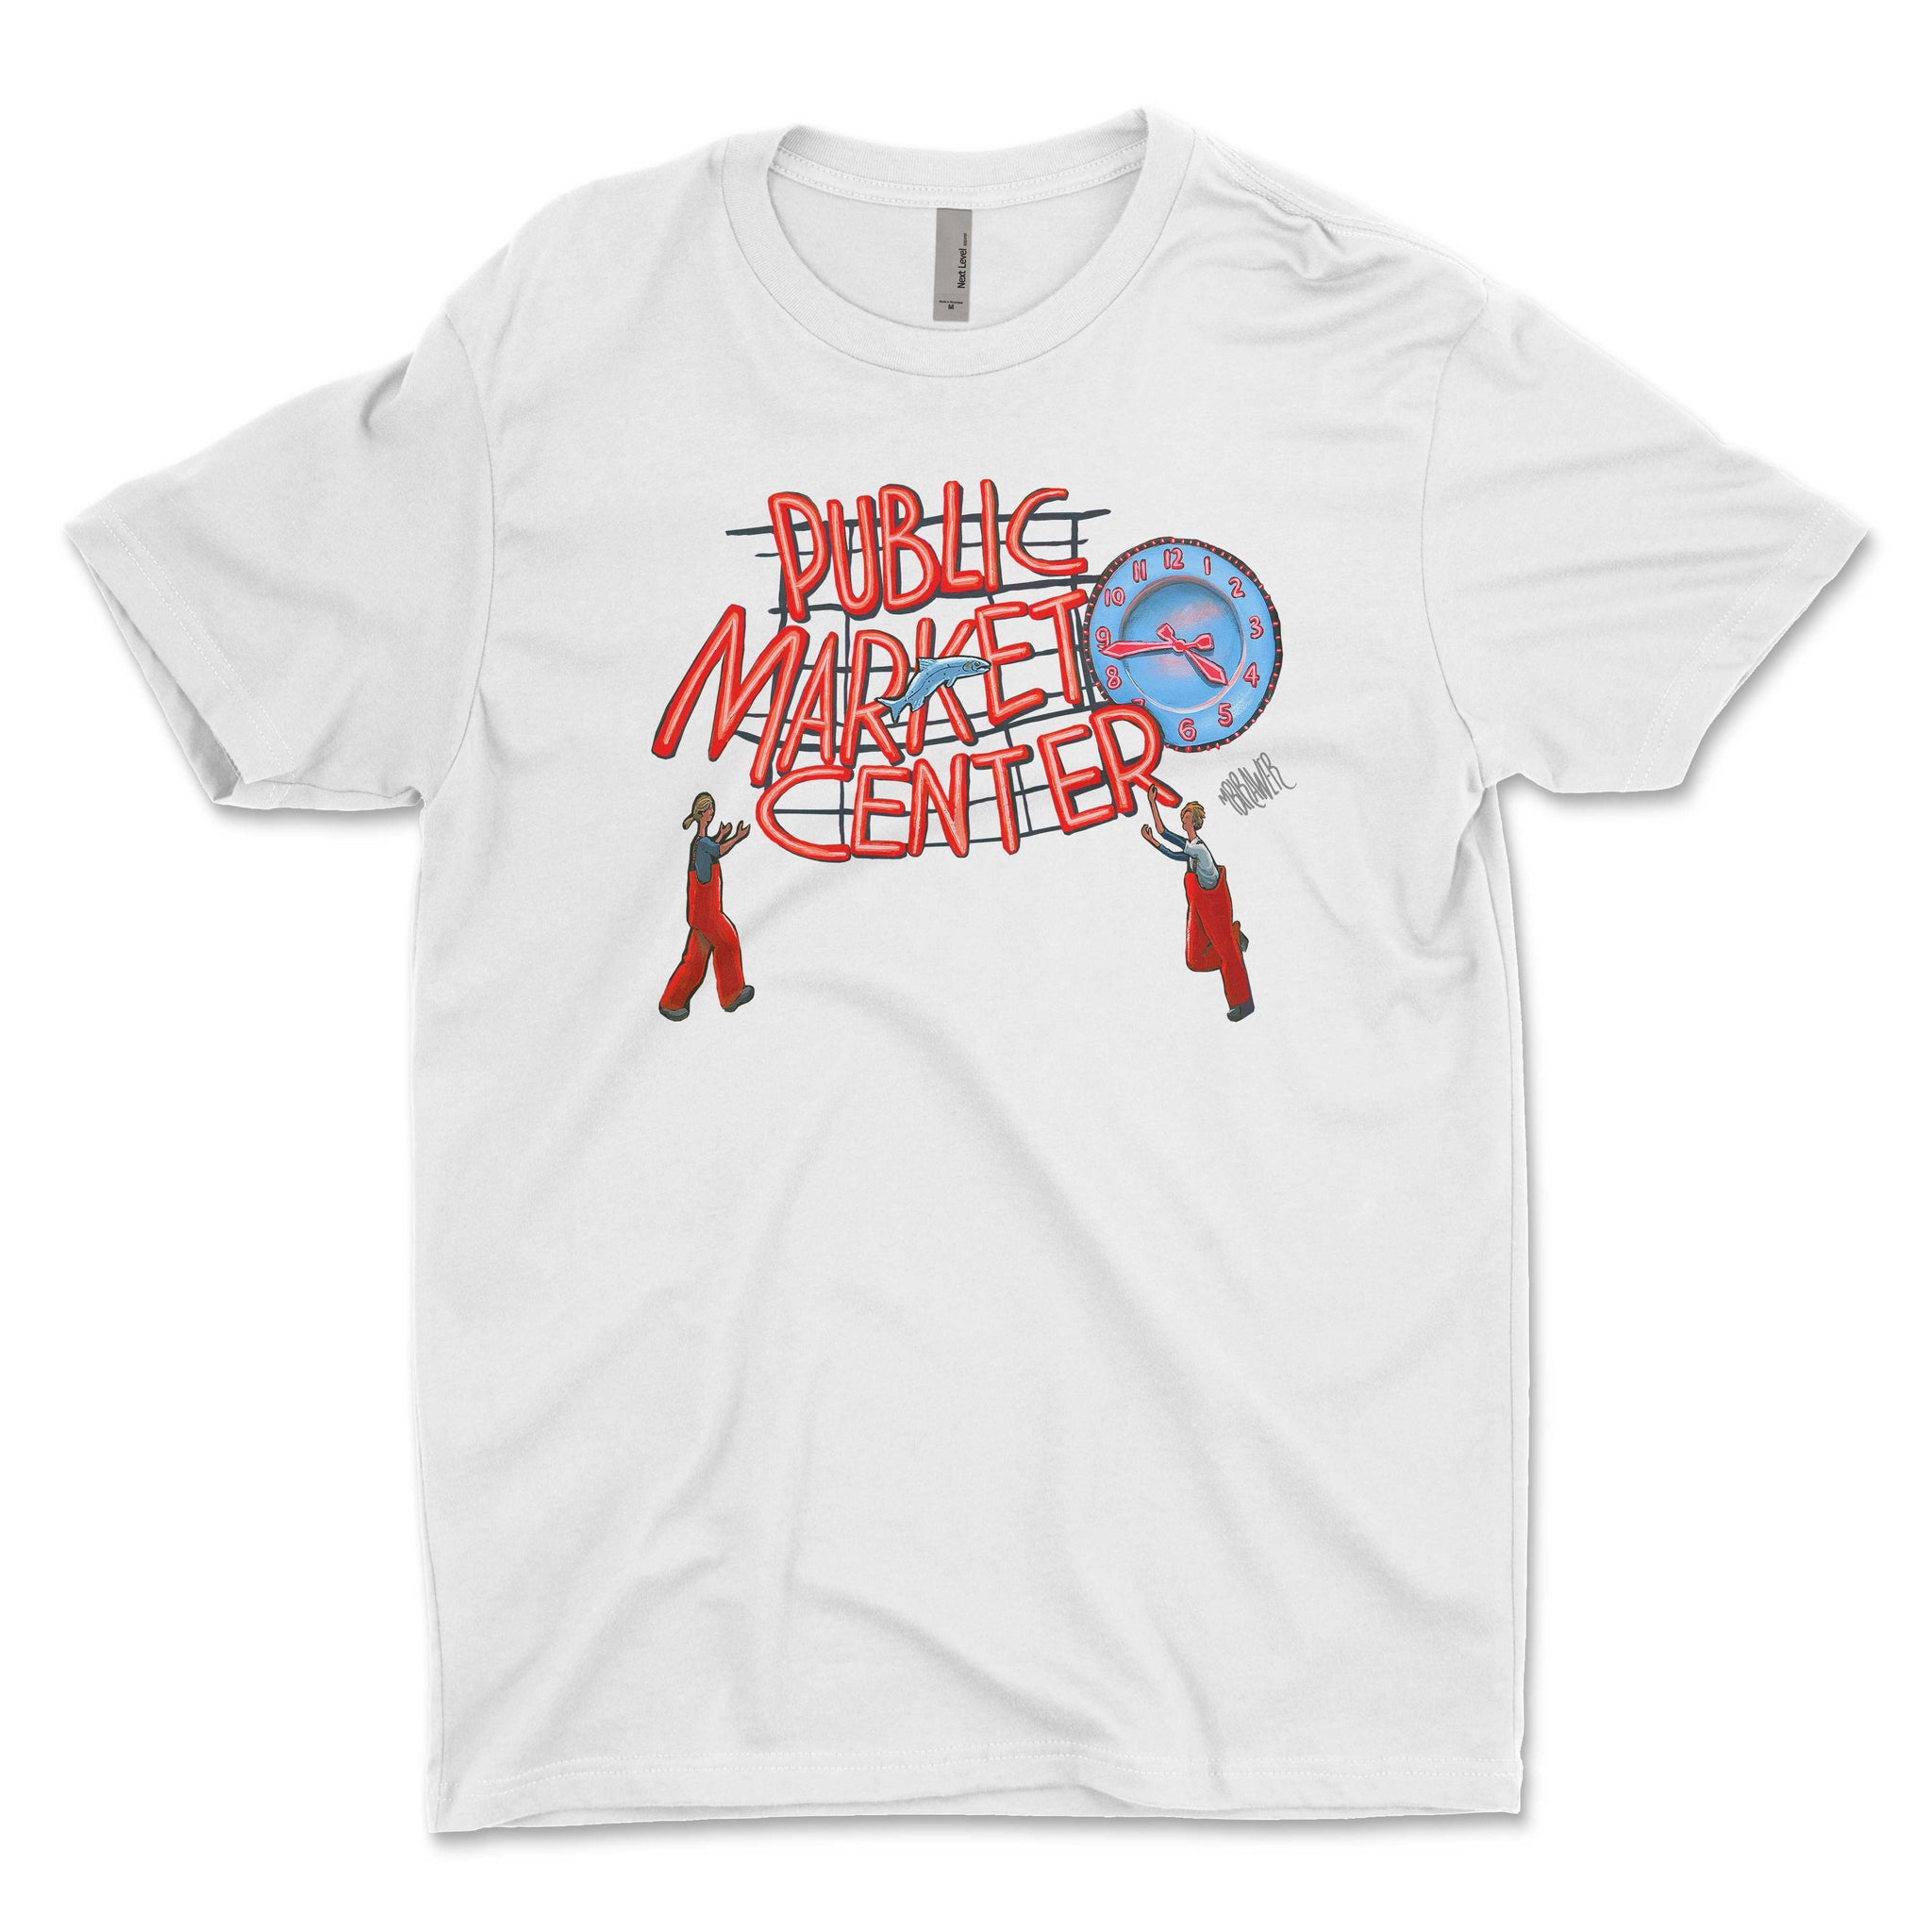 Pike Place Market Unisex T-Shirt - Michael Birawer Shop